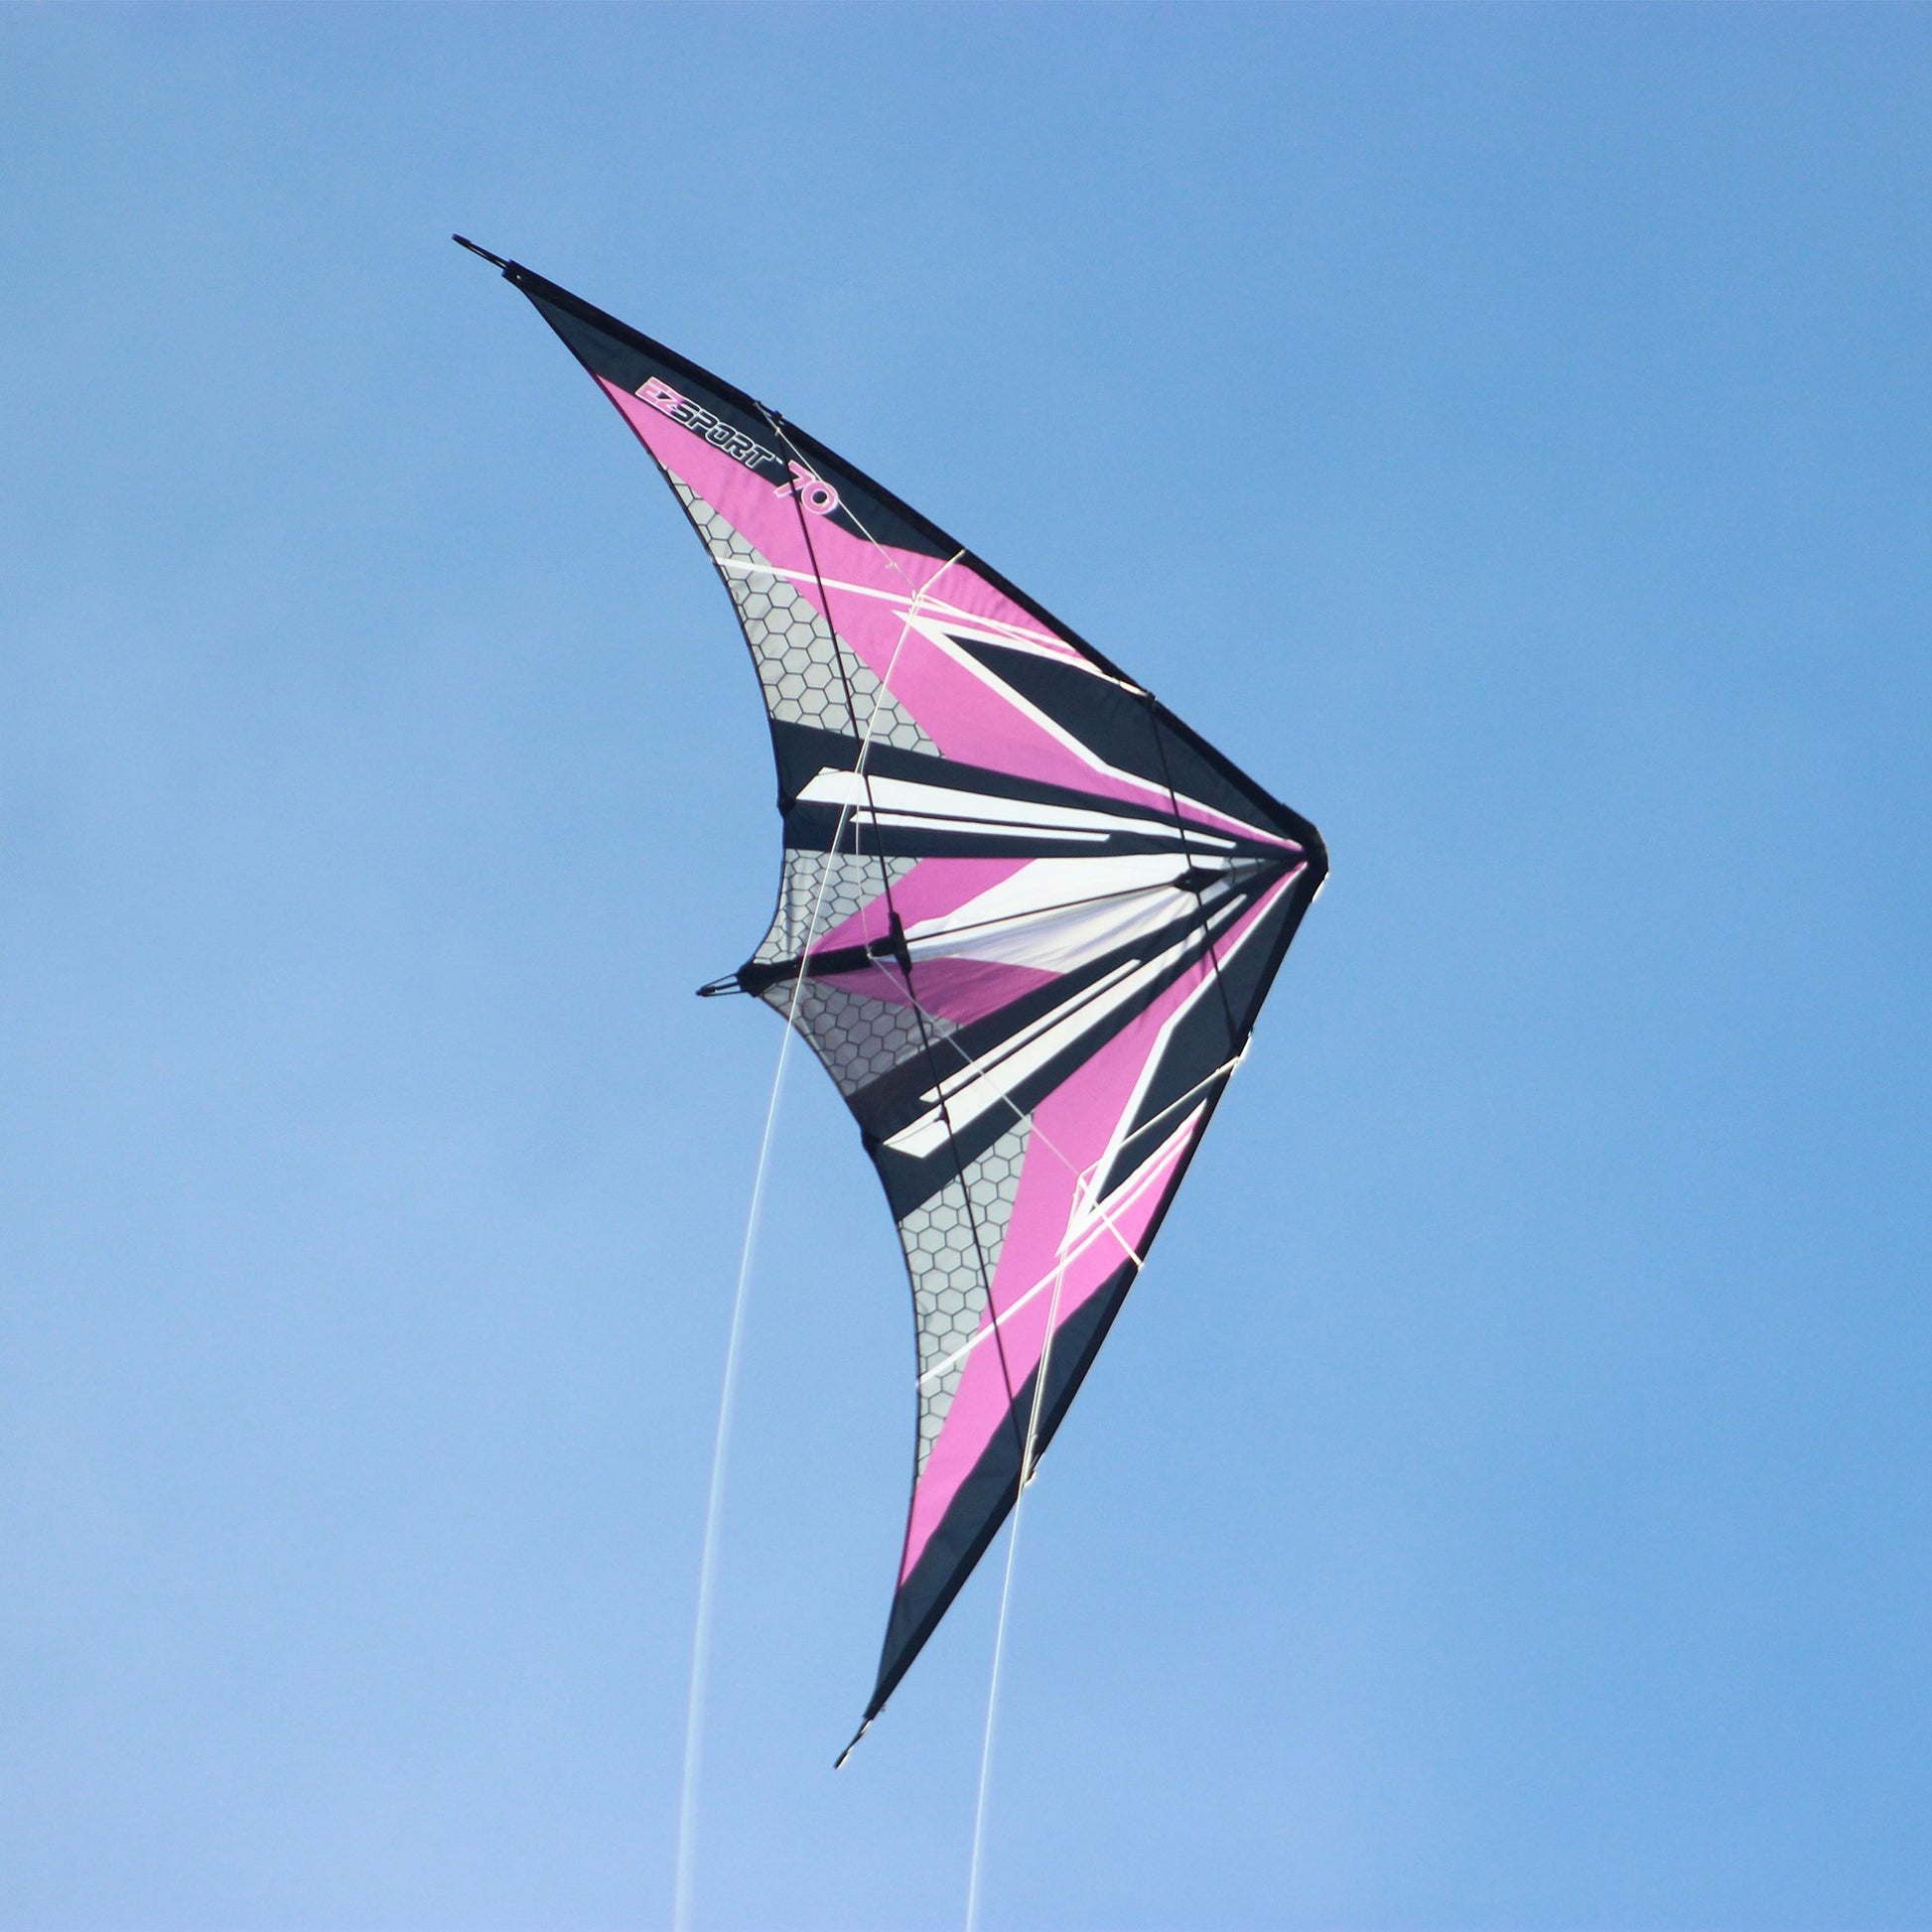 WindNSun EZ Sport 70 Dual Control Sport Kite Teal Hexagon Nylon Kite photo of product in use